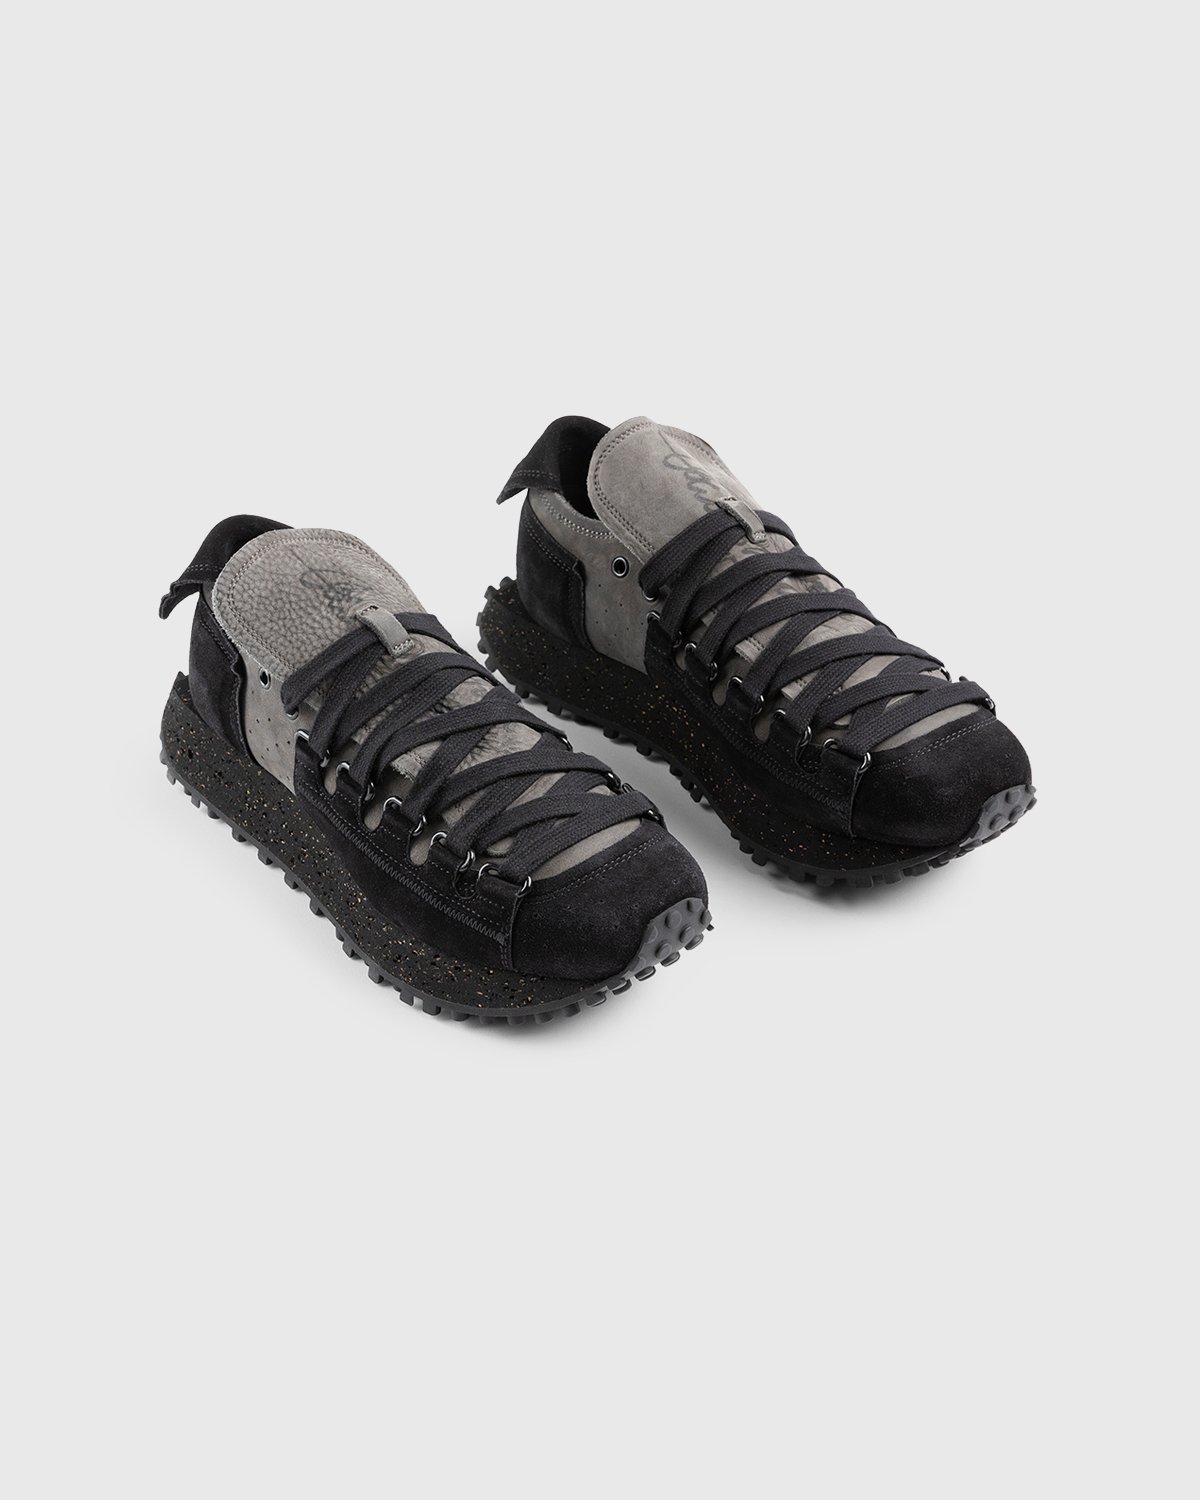 Acne Studios - Nofo Lace-Up Sneakers Grey/Black - Footwear - Black - Image 4